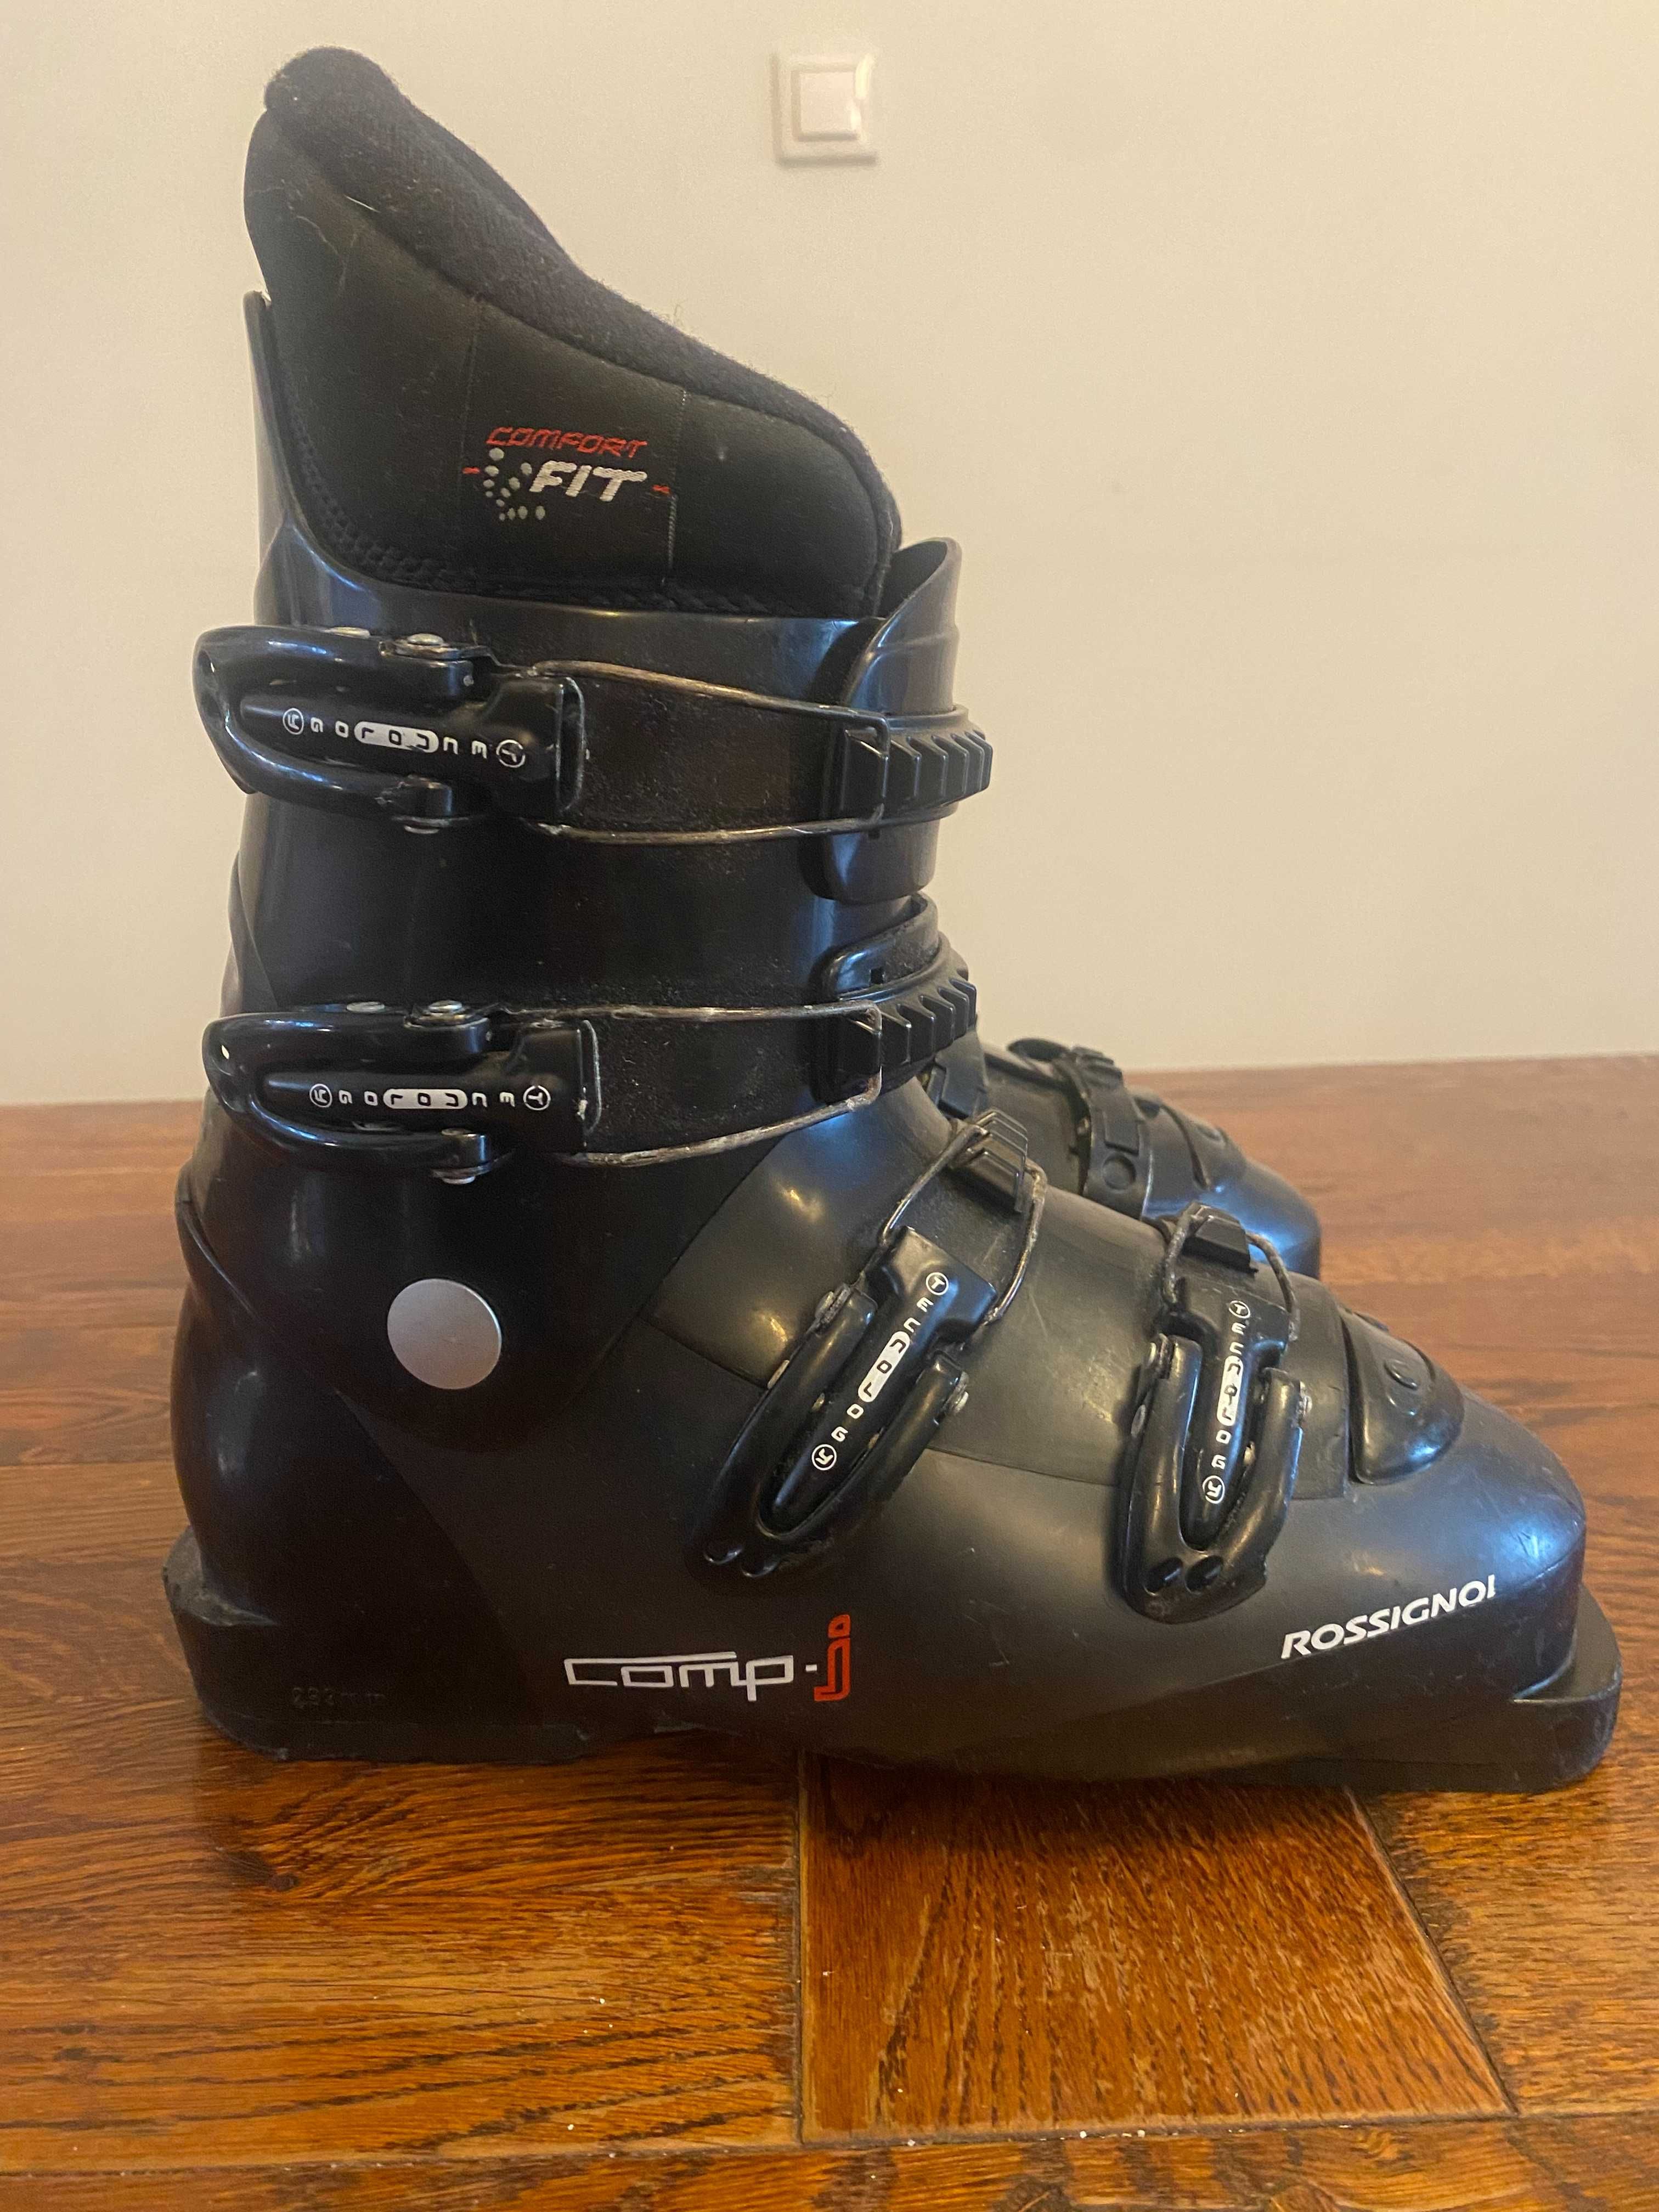 Buty narciarskie juniorskie Rossignol Comp J r 24,5, dł skorupy 265 mm